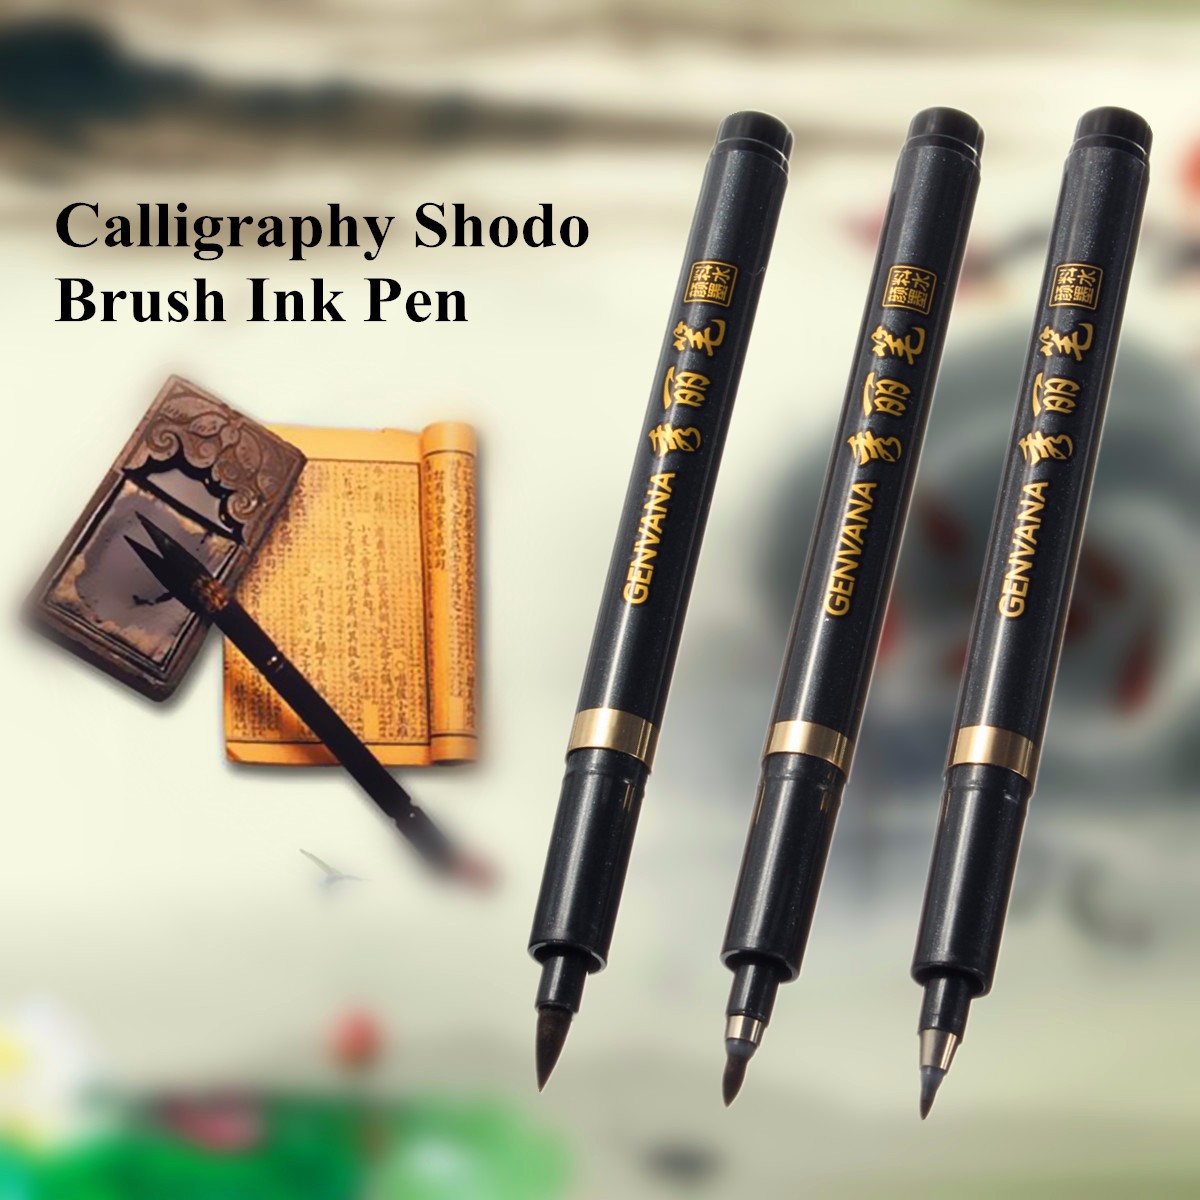  1Pcs Soft Brush Head Chinese Calligraphy Pen Writing Art Script Painting Brush Pen L/M/S Three Size